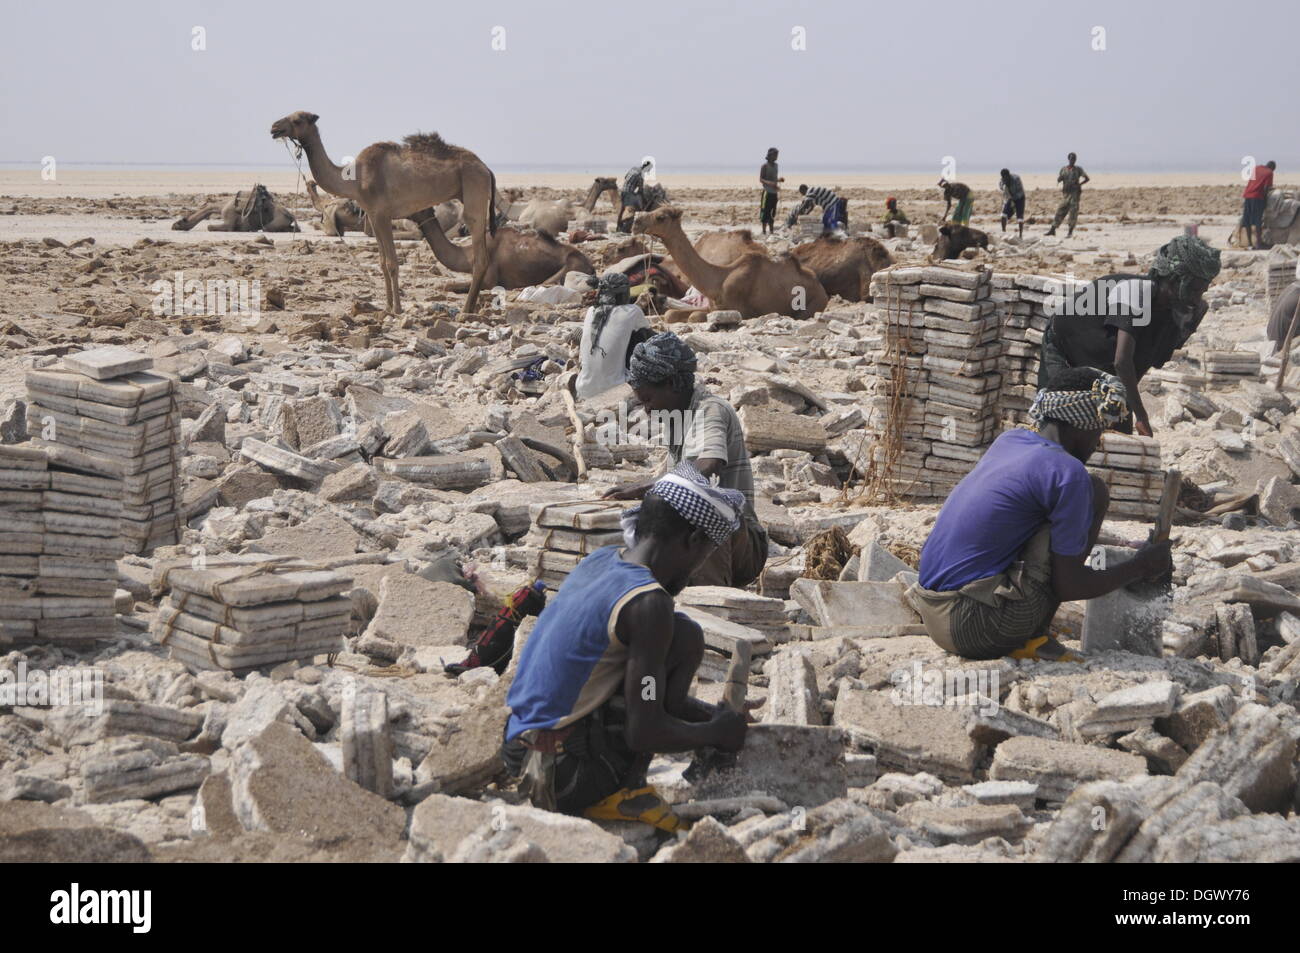 Danakil desert Ethiopia, workers salt mining camel trains Stock Photo